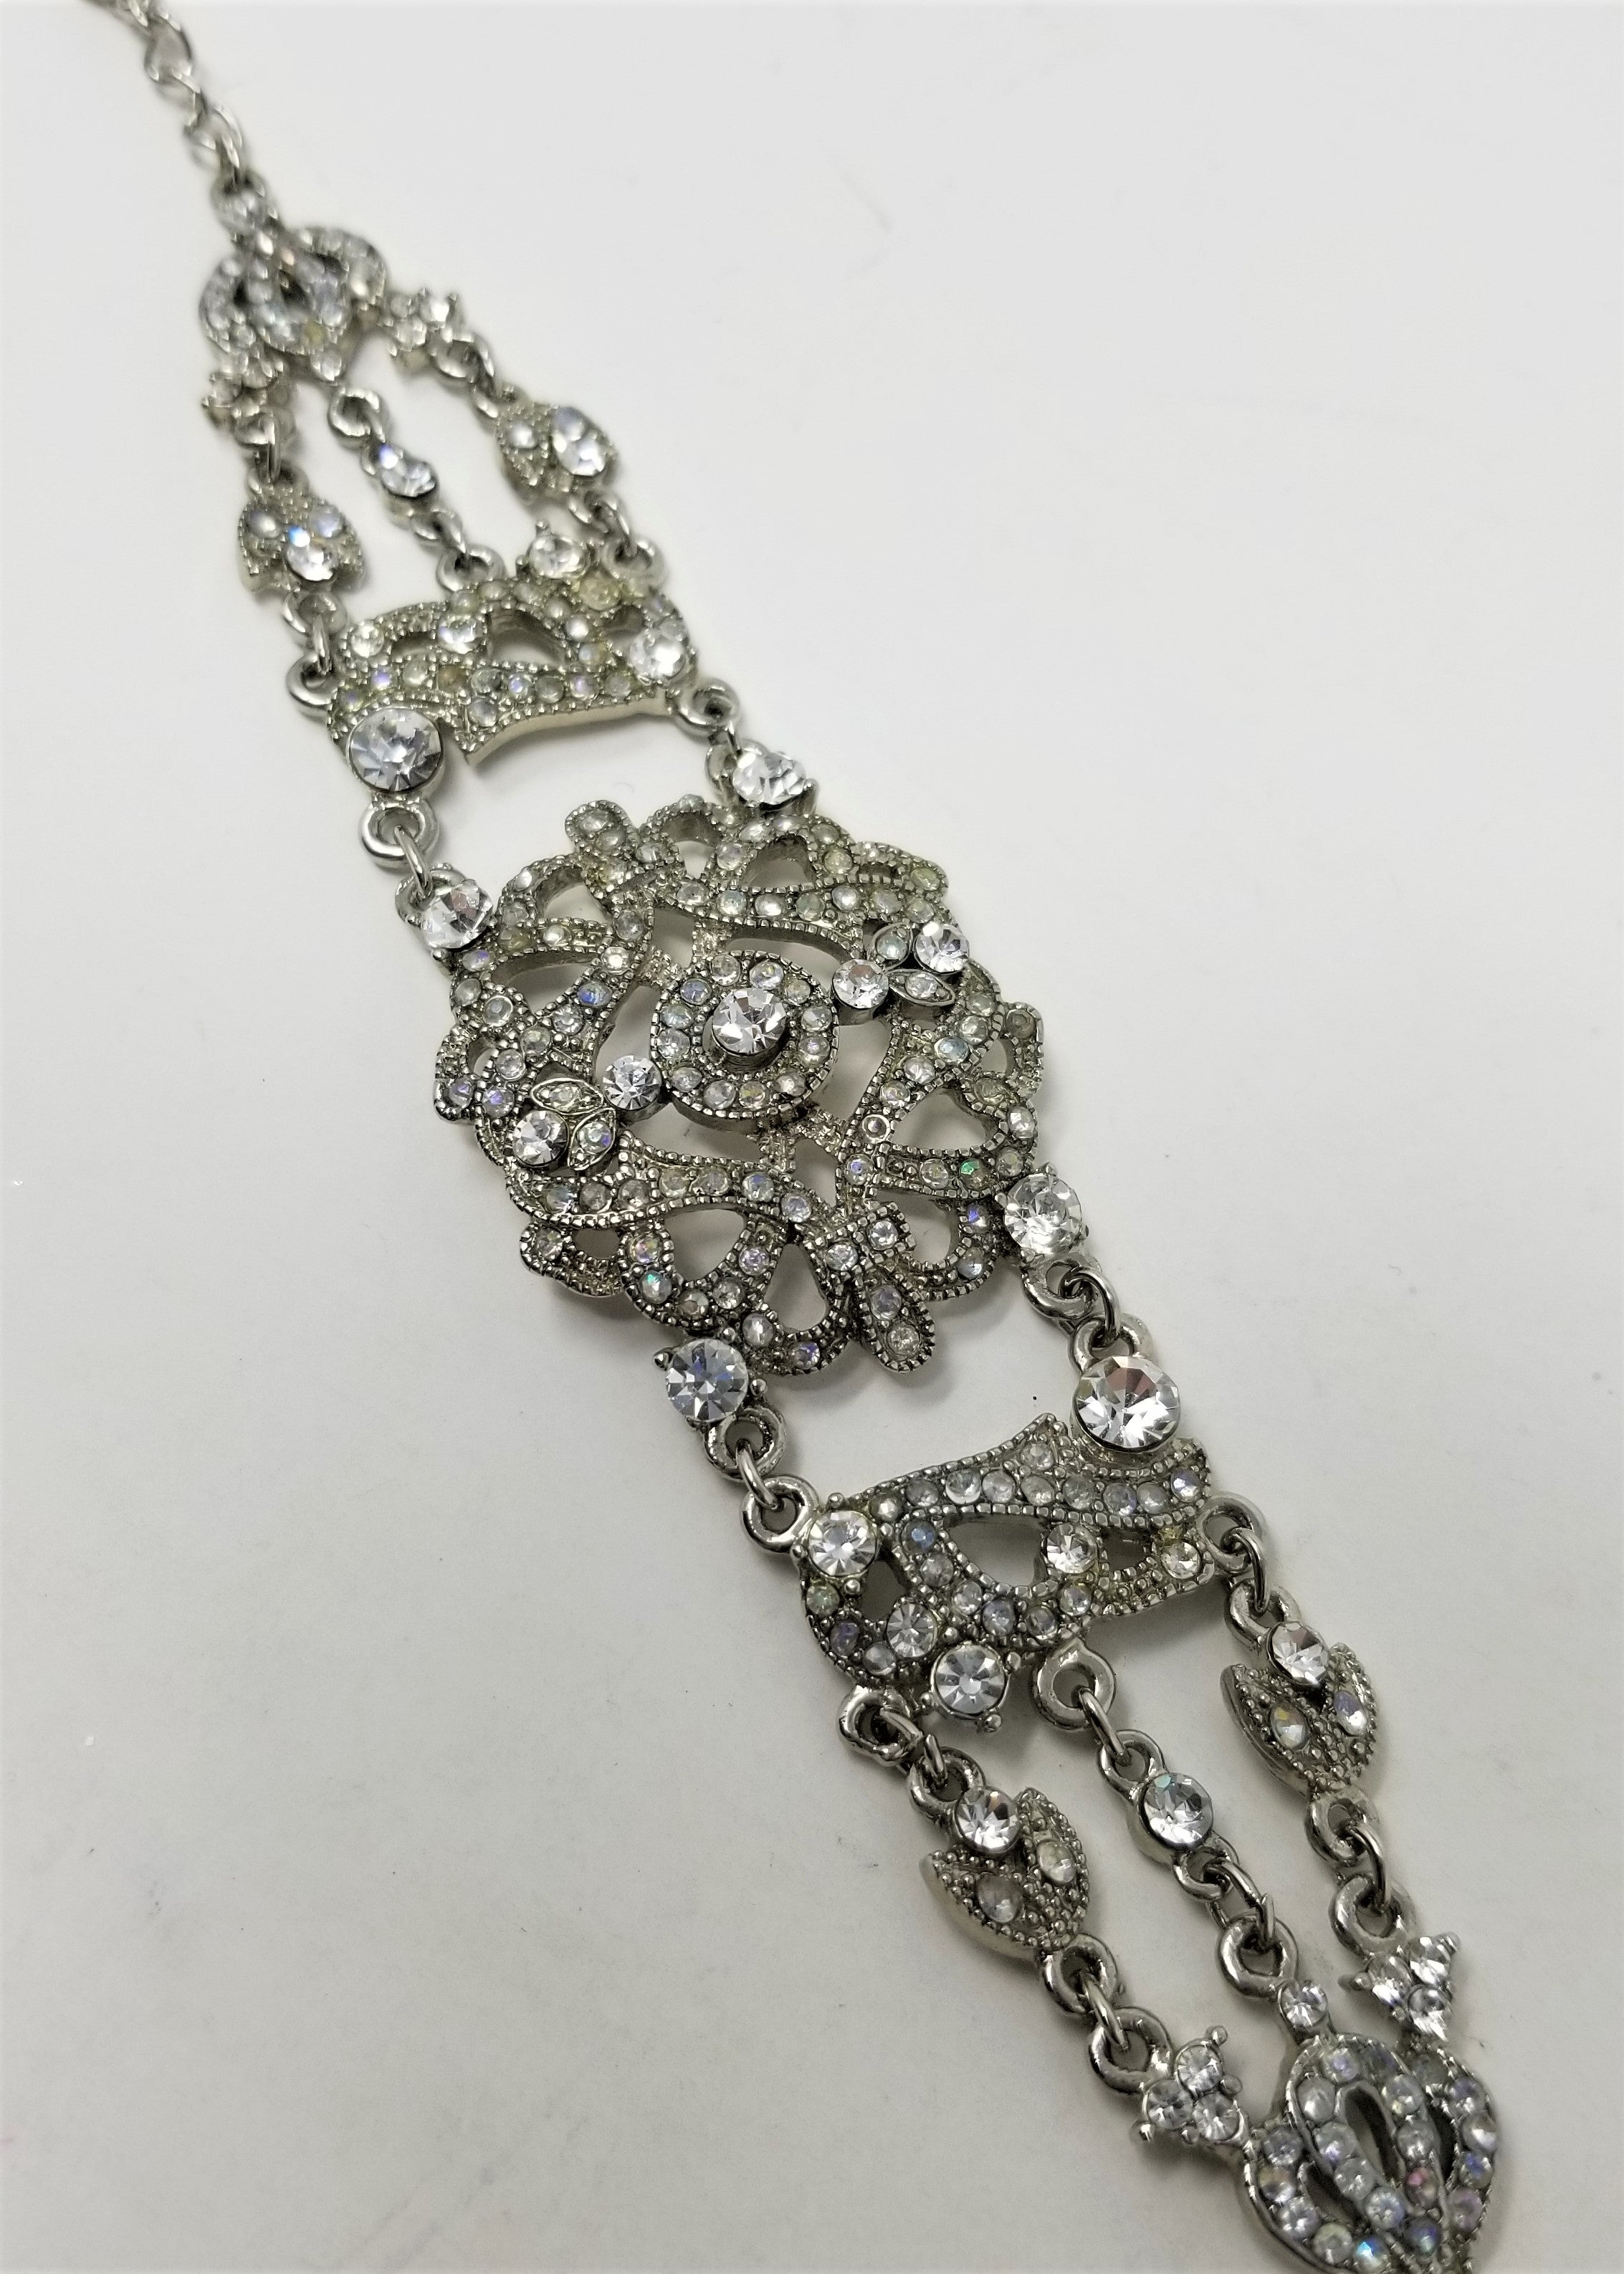 Vintage Rhinestone Bracelet Delicate & Beautiful